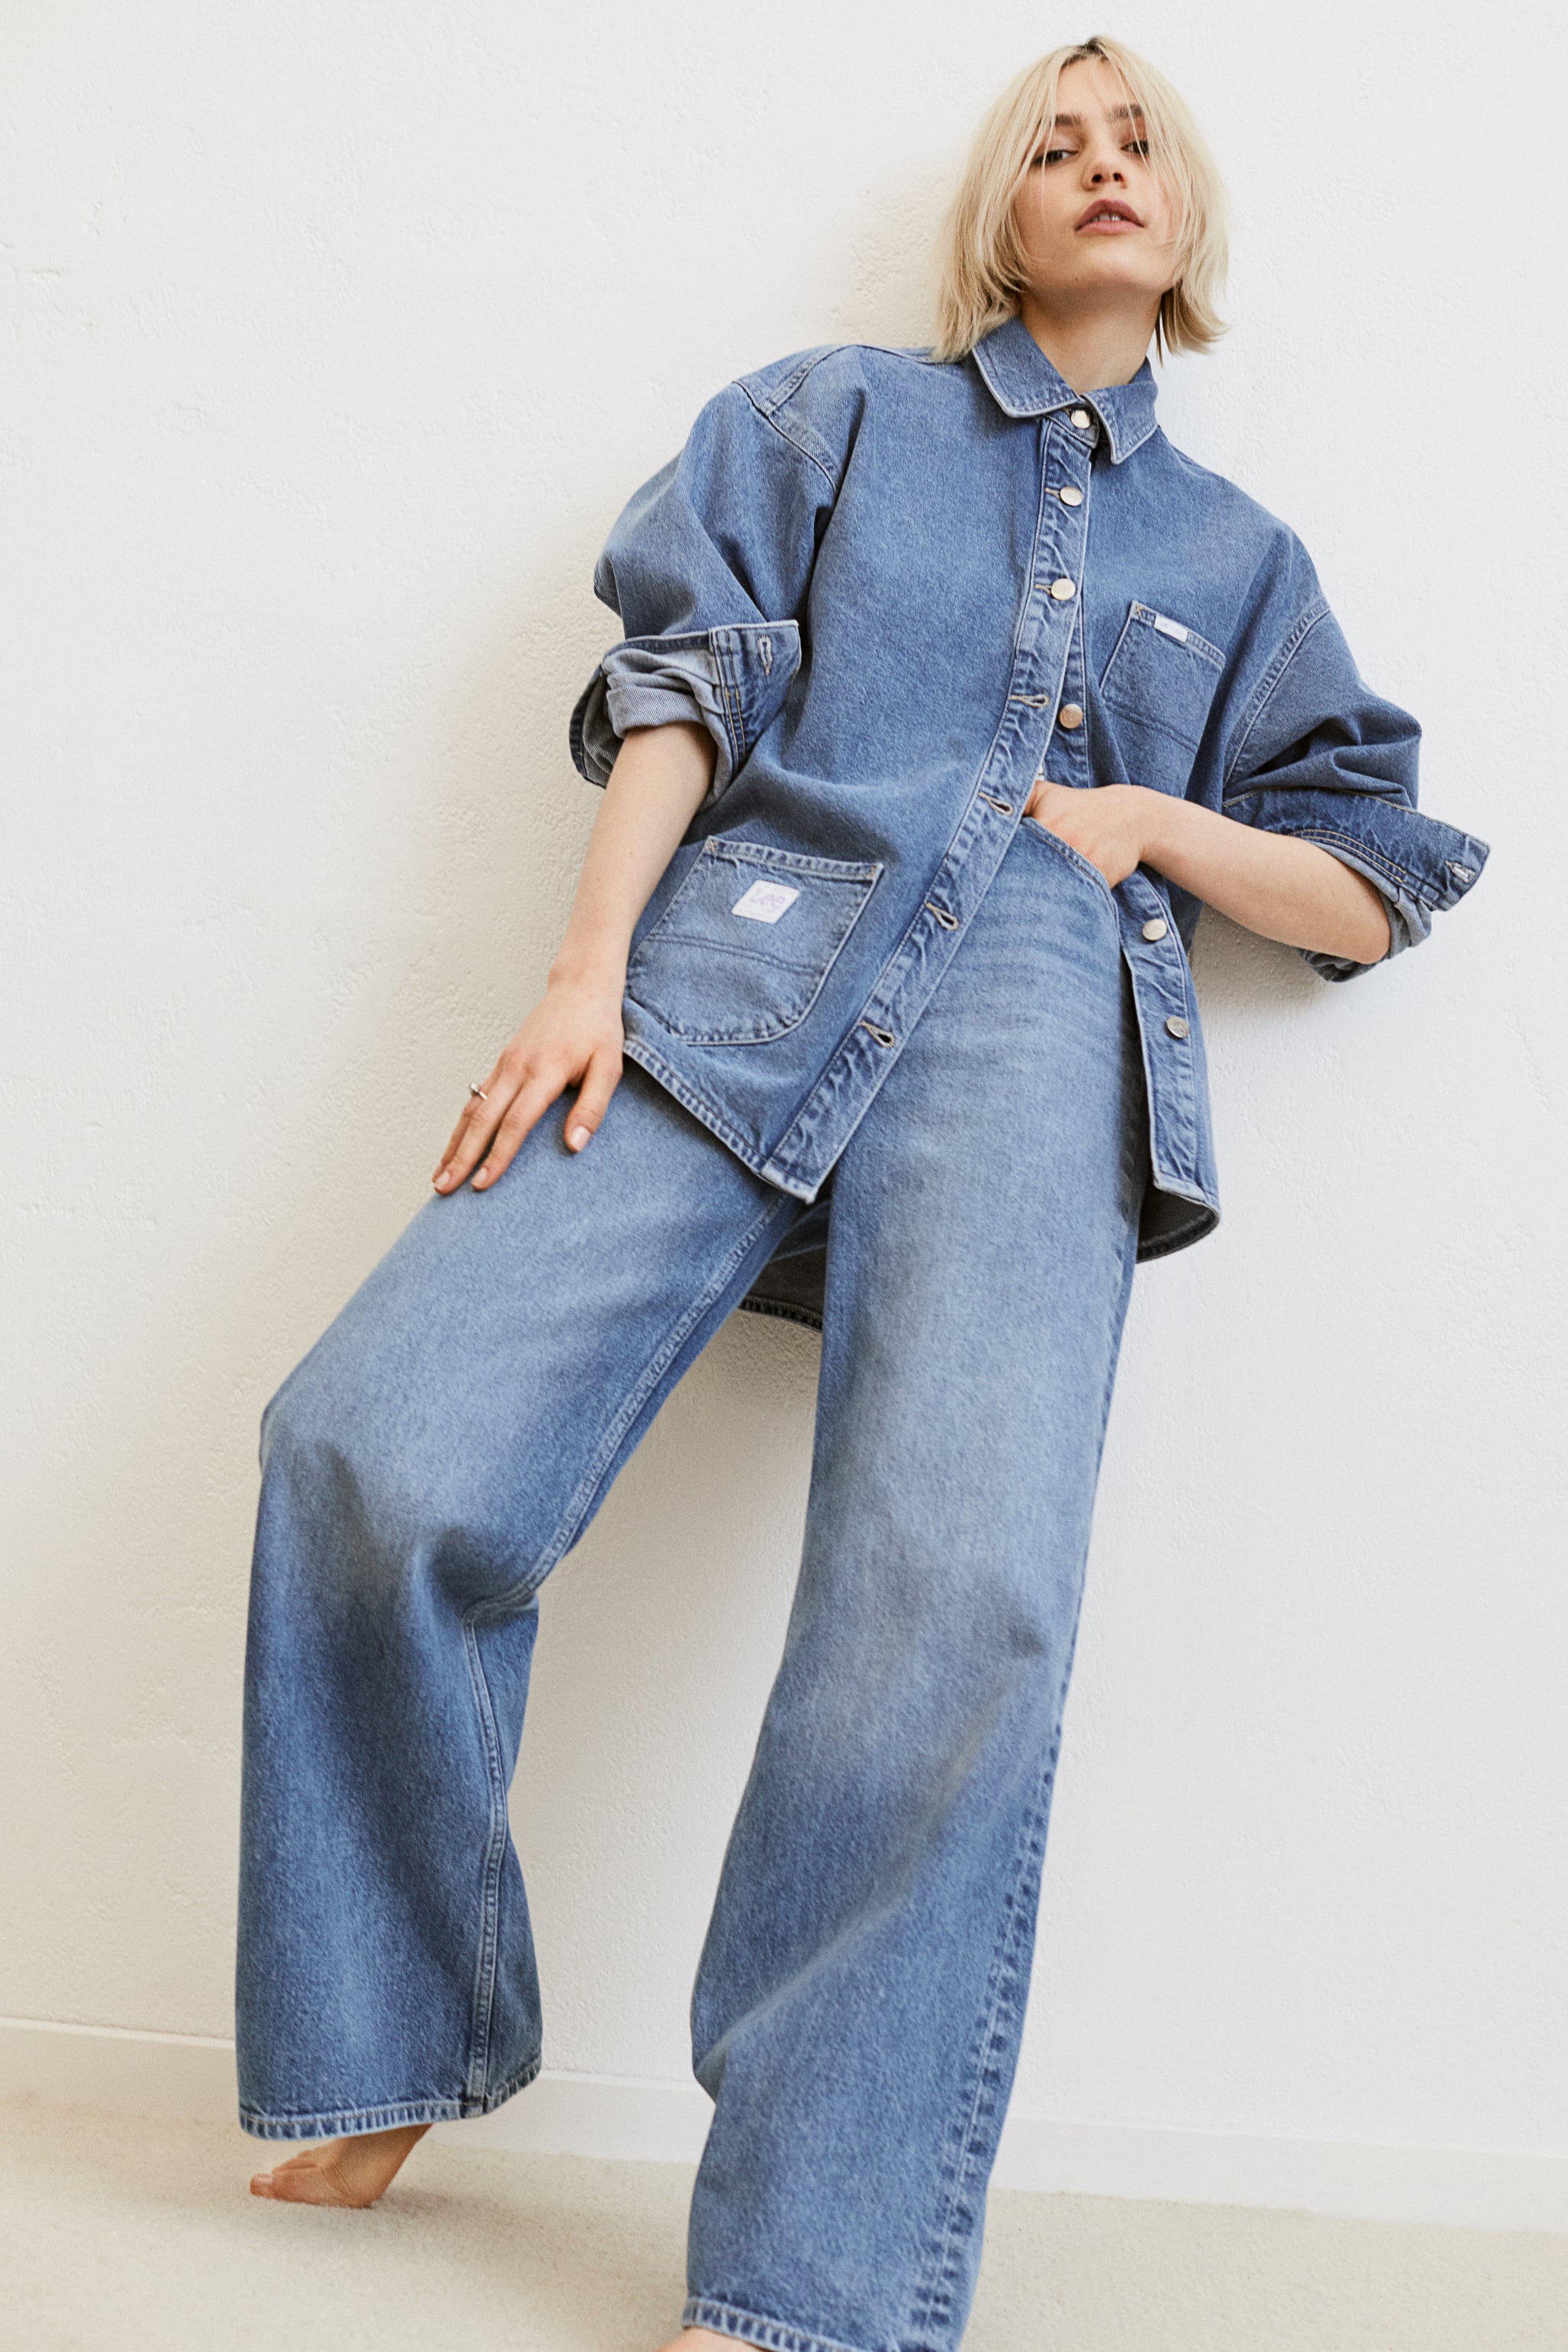 H&M x Lee Sustainable Denim Jeans Collection | POPSUGAR Fashion